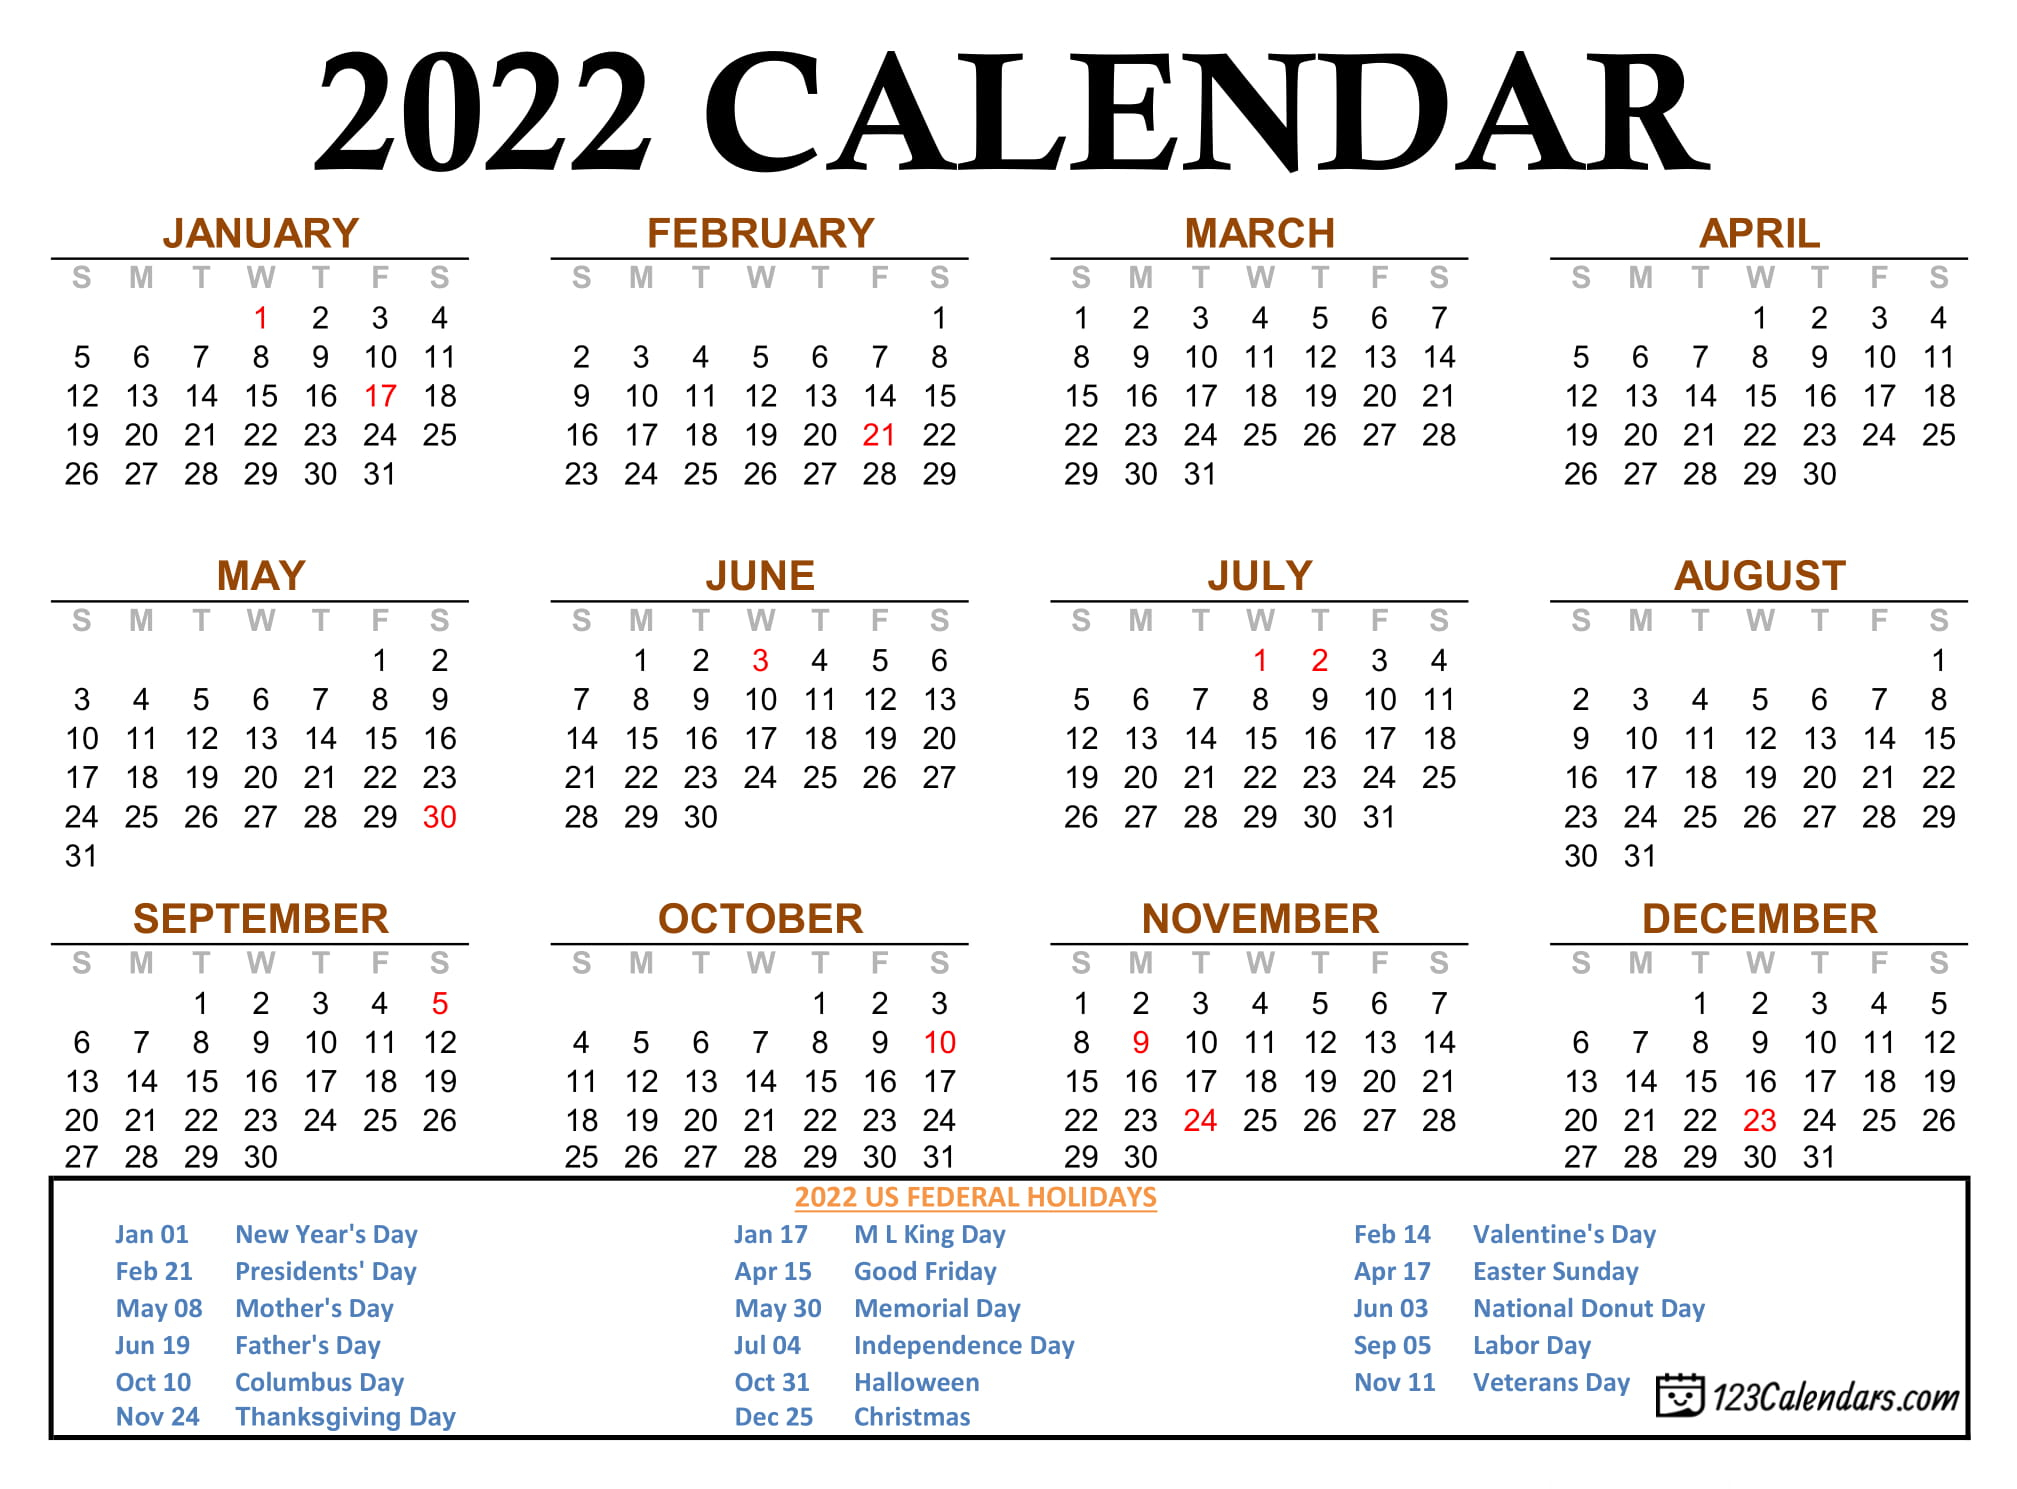 Year 2022 Calendar Templates | 123Calendars